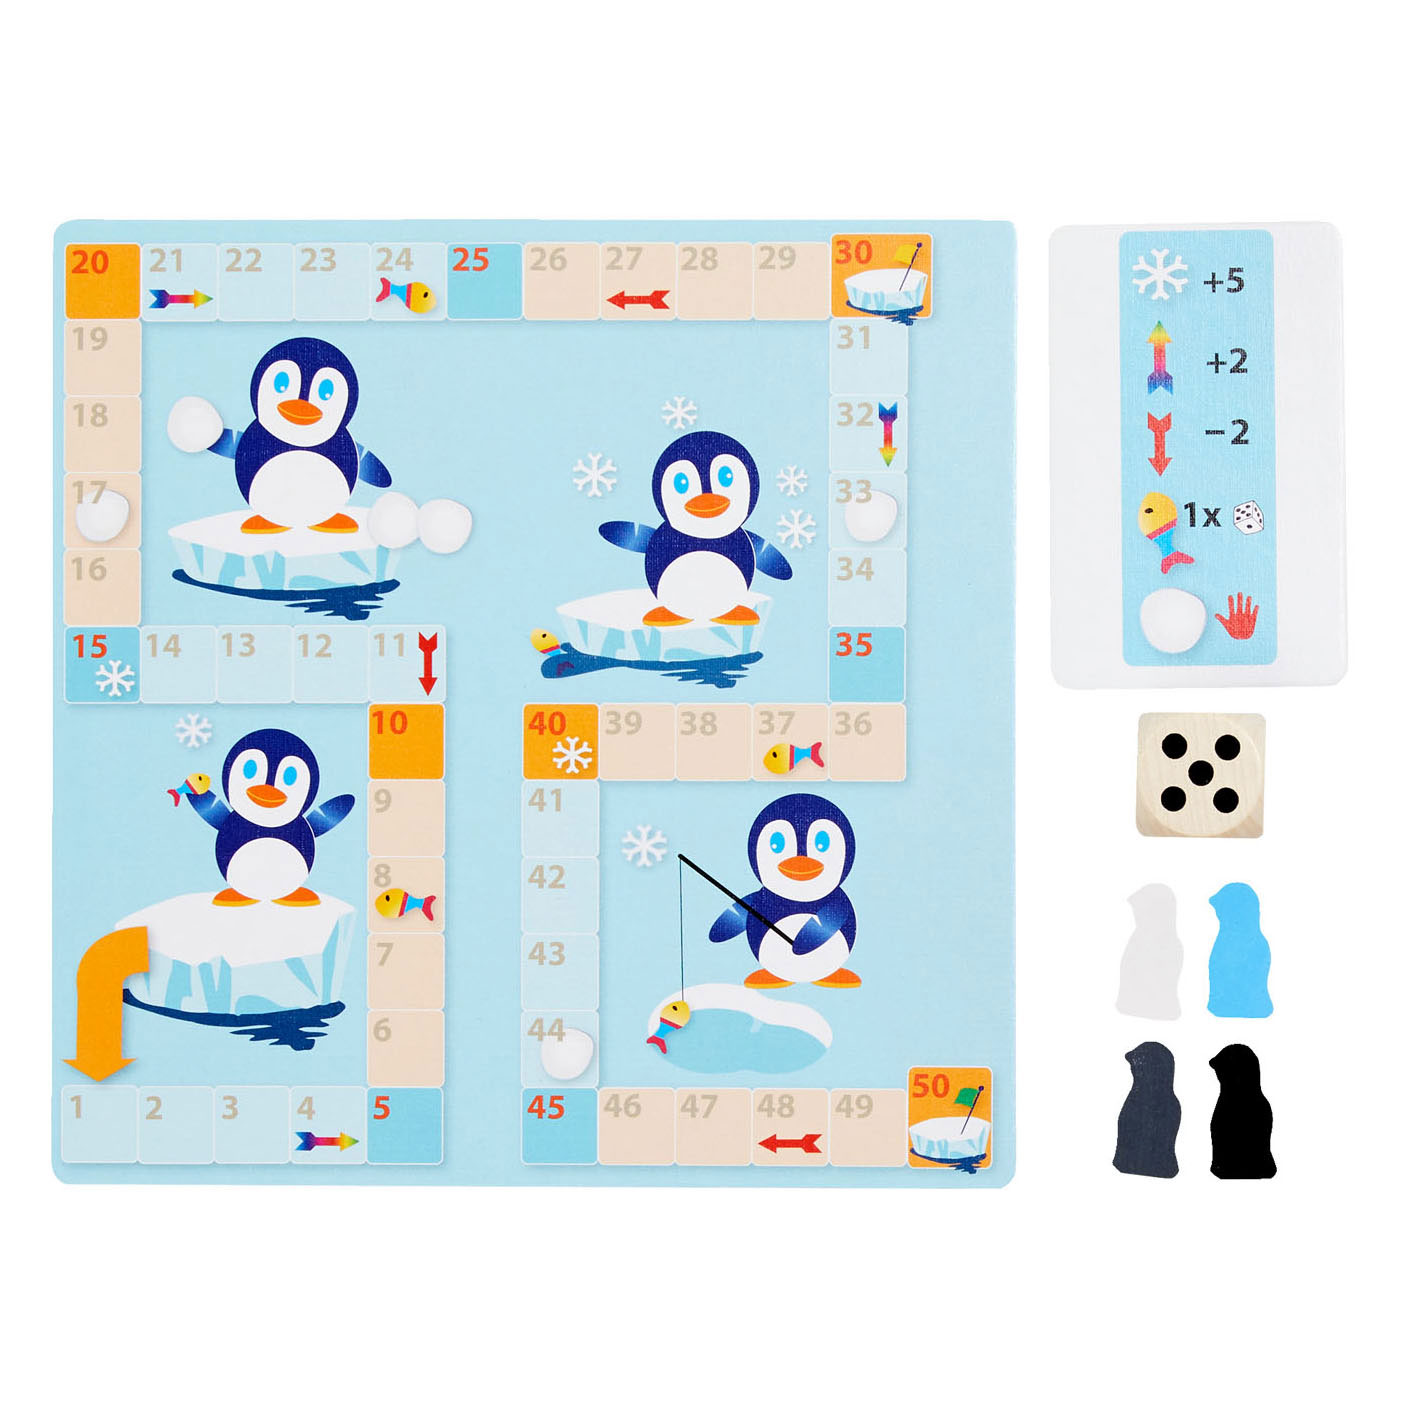 Rolf Basics - Course de pingouins avec Arthur Counting Math Game